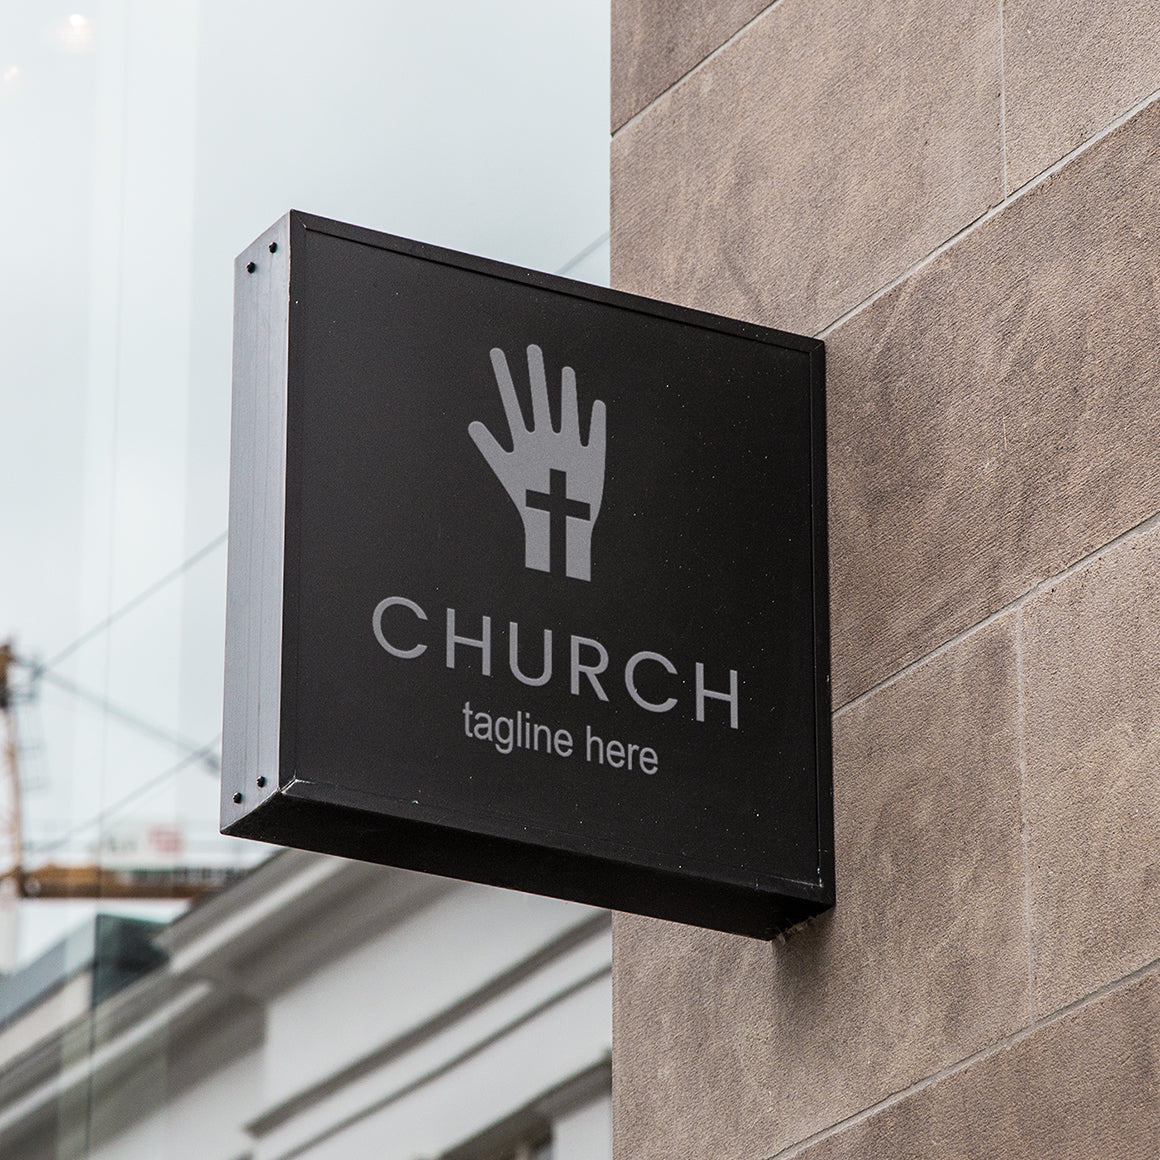 Church hand logo template